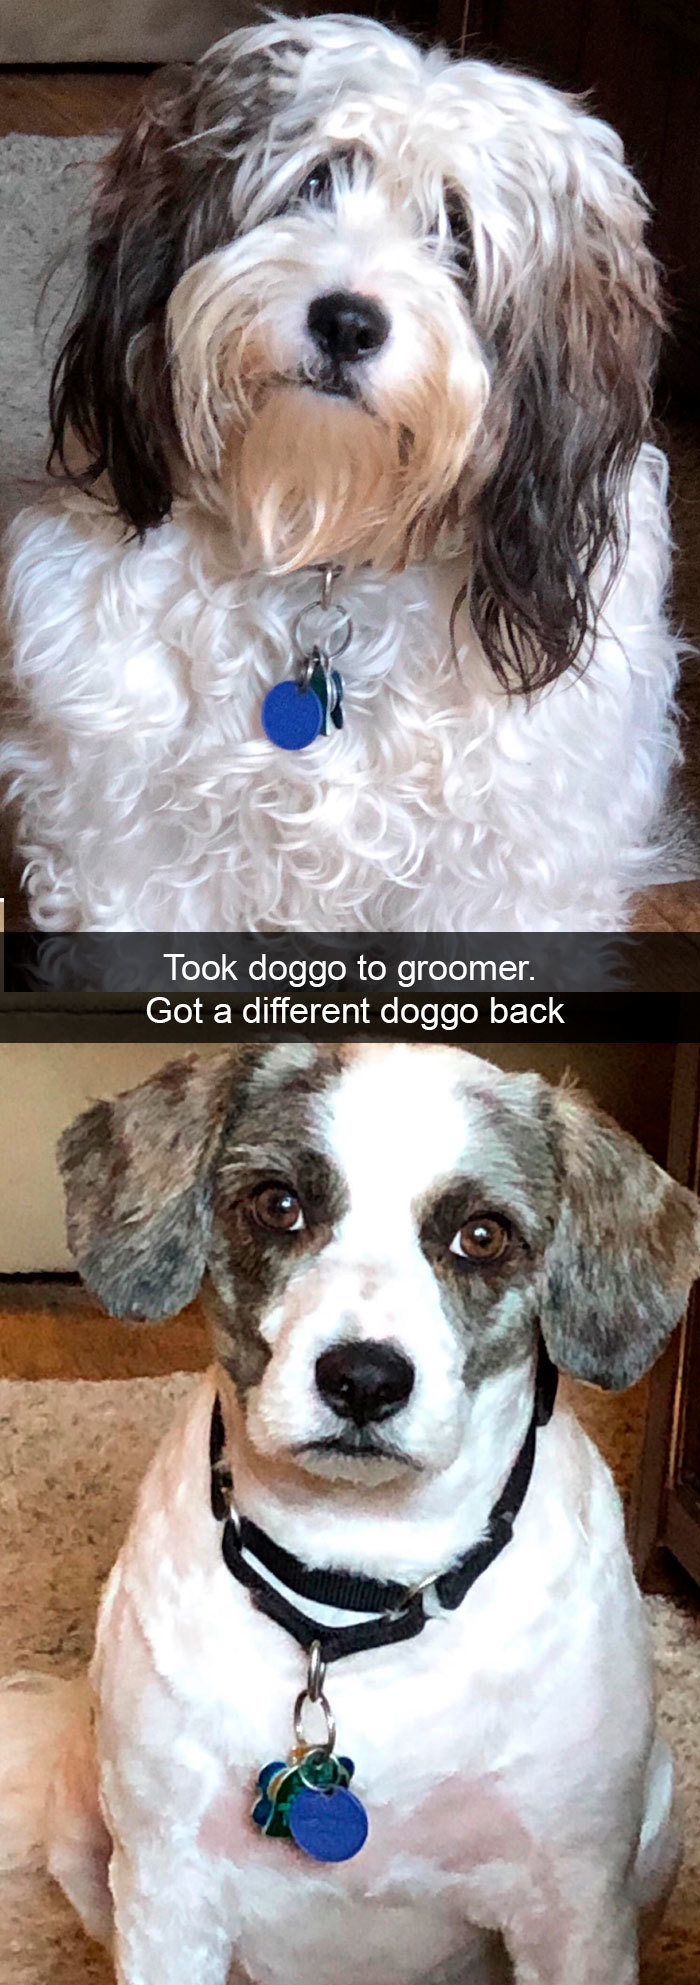 Took doggo to groomer. Got a different doggo back